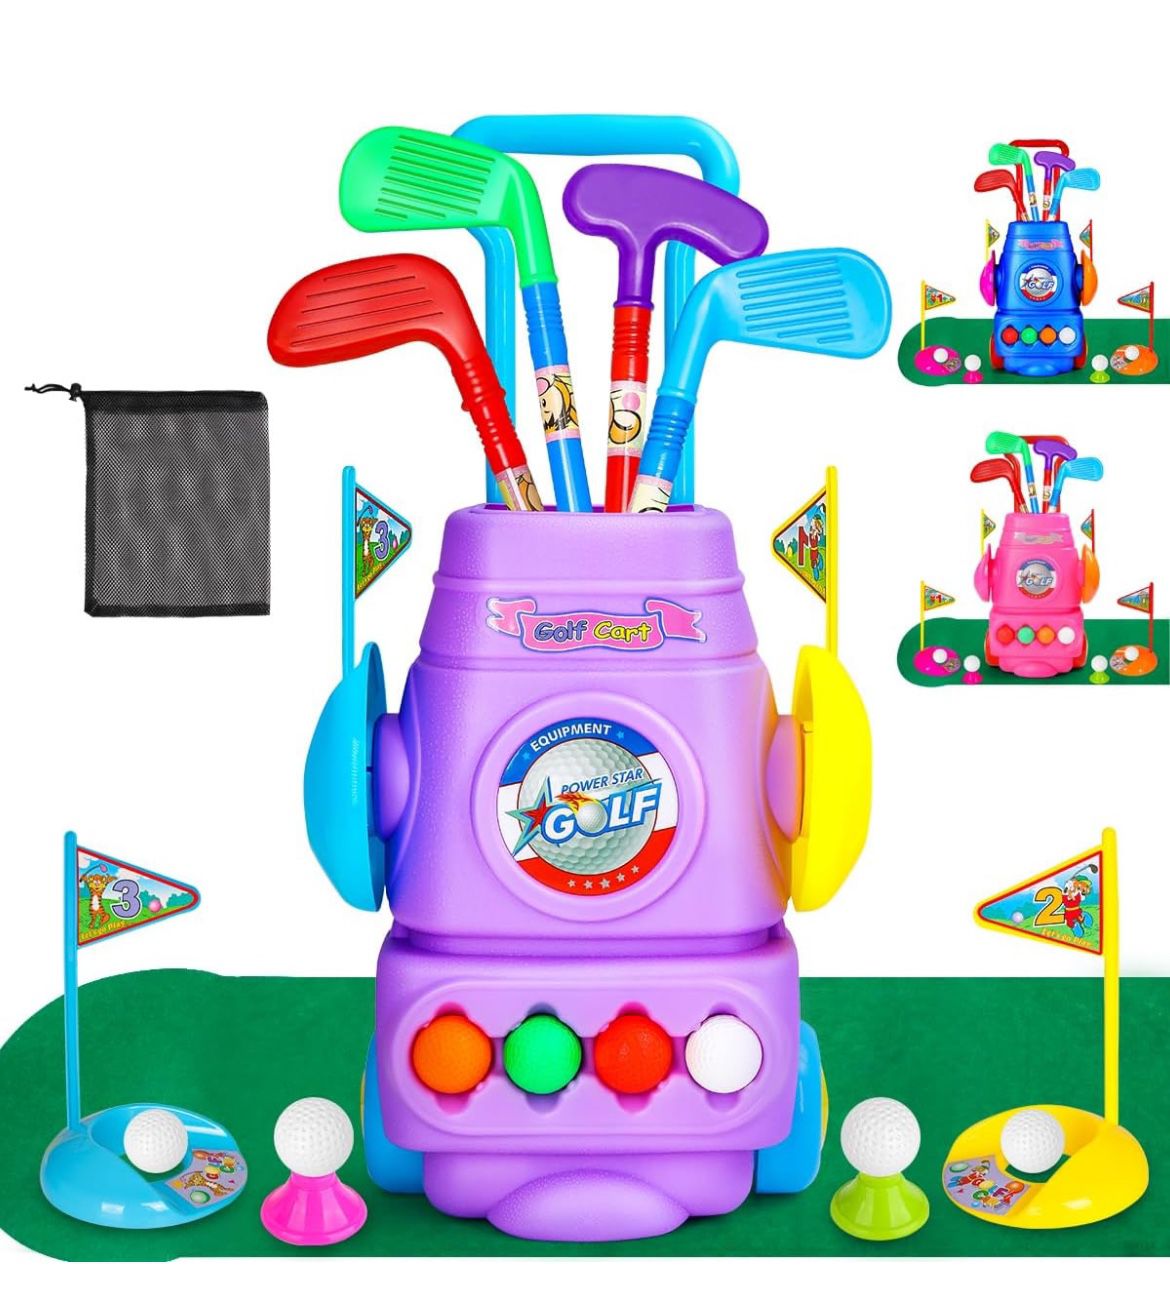 Kids Golf Club Set - Toddler Golf Ball Game Play Set Sports Toys Gift for Boys Girls 3 4 5 6 Year Ol